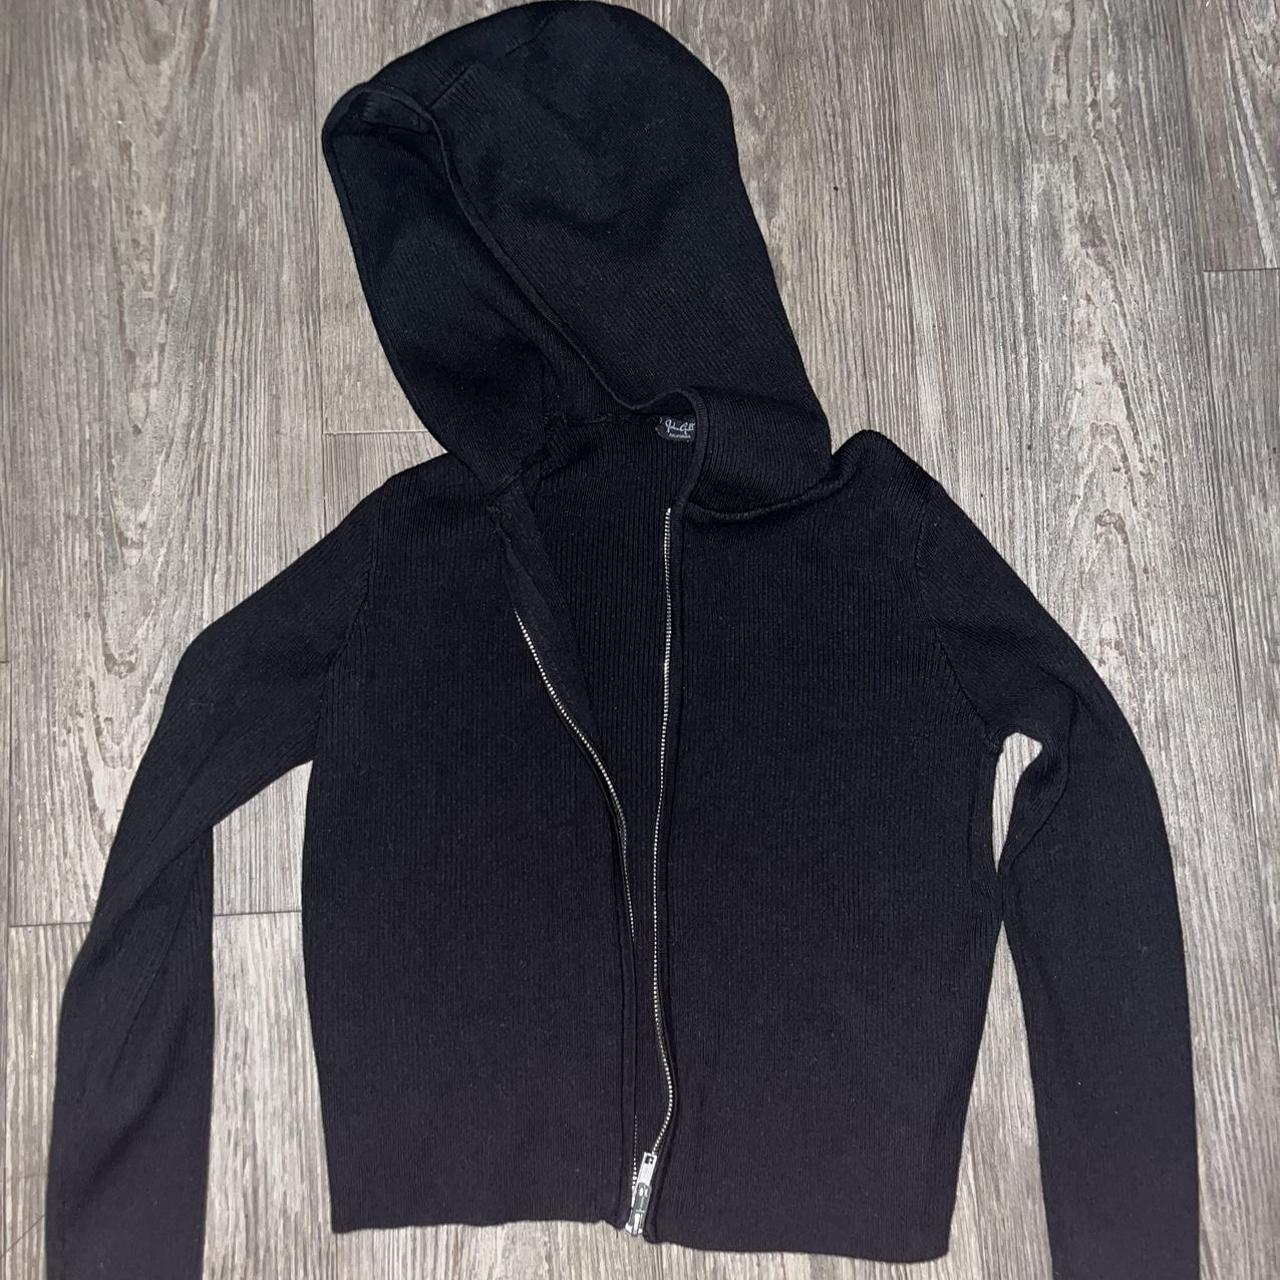 Brandy Melville Black Arden hoodie